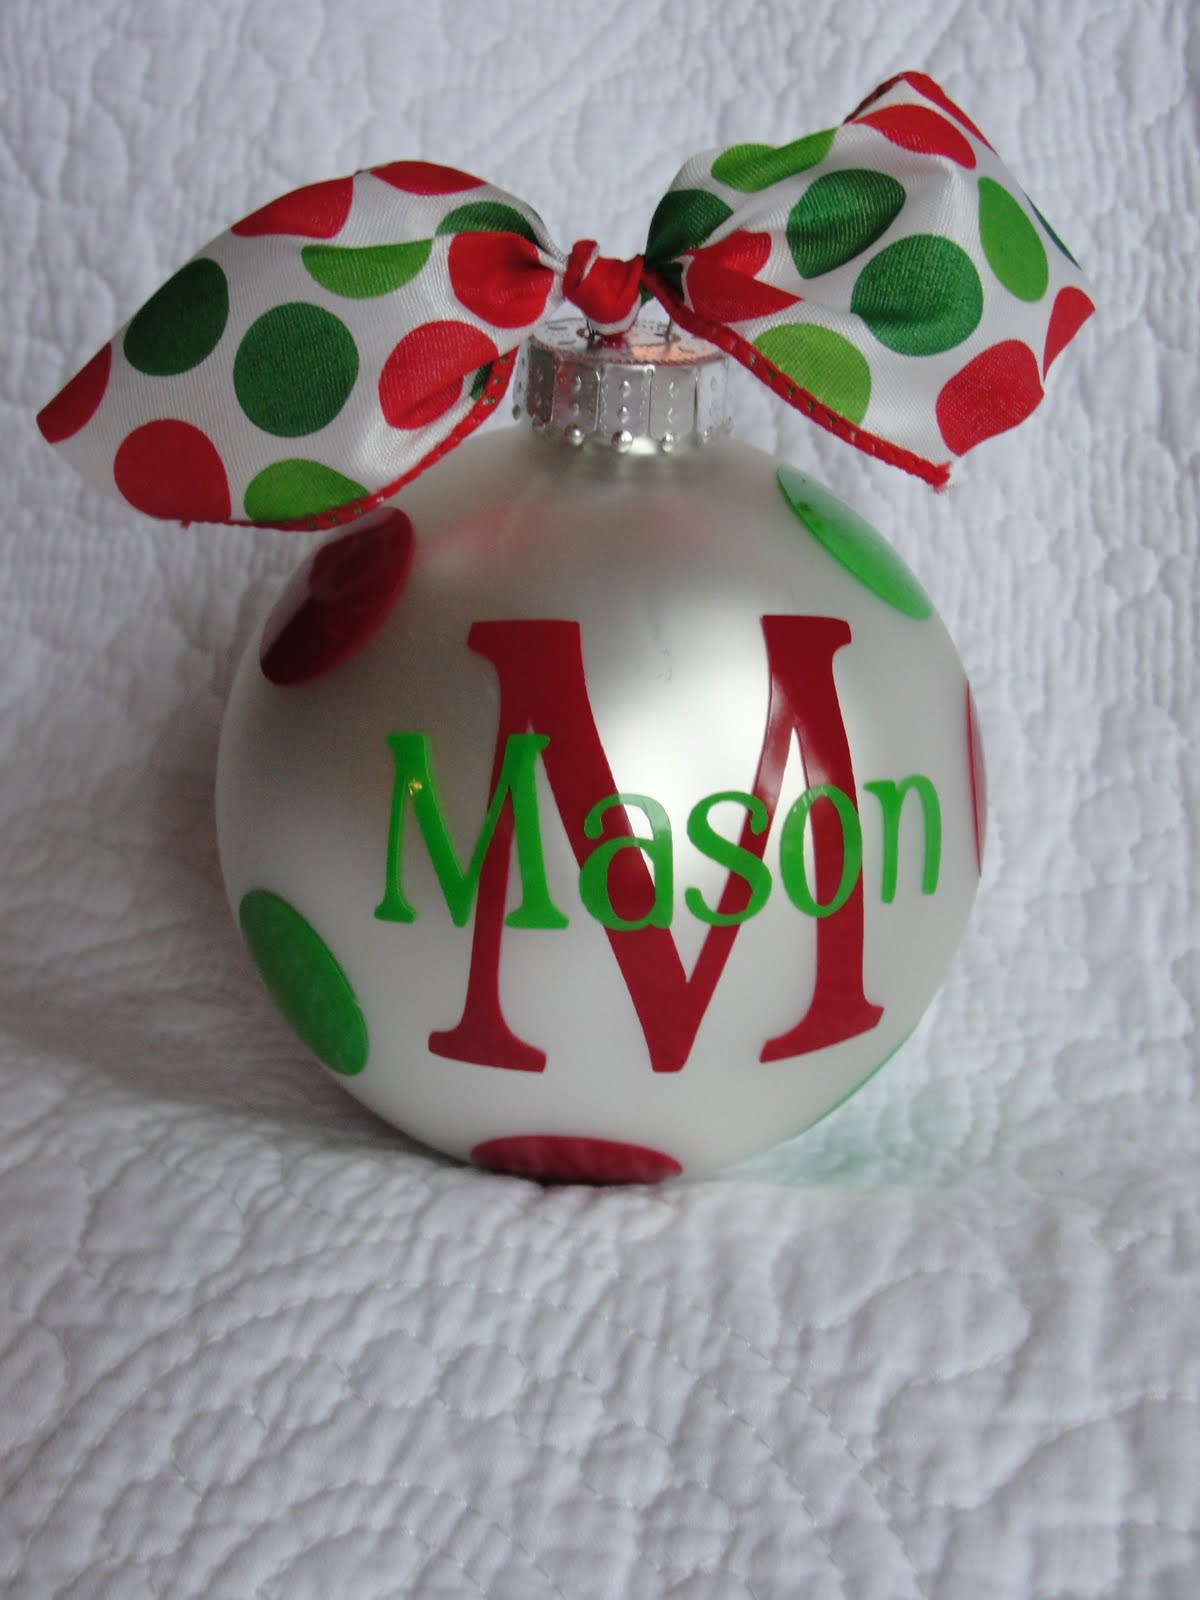 DIY Personalized Christmas Ornaments
 Rantin & Ravin HOMEMADE ORNAMENTS